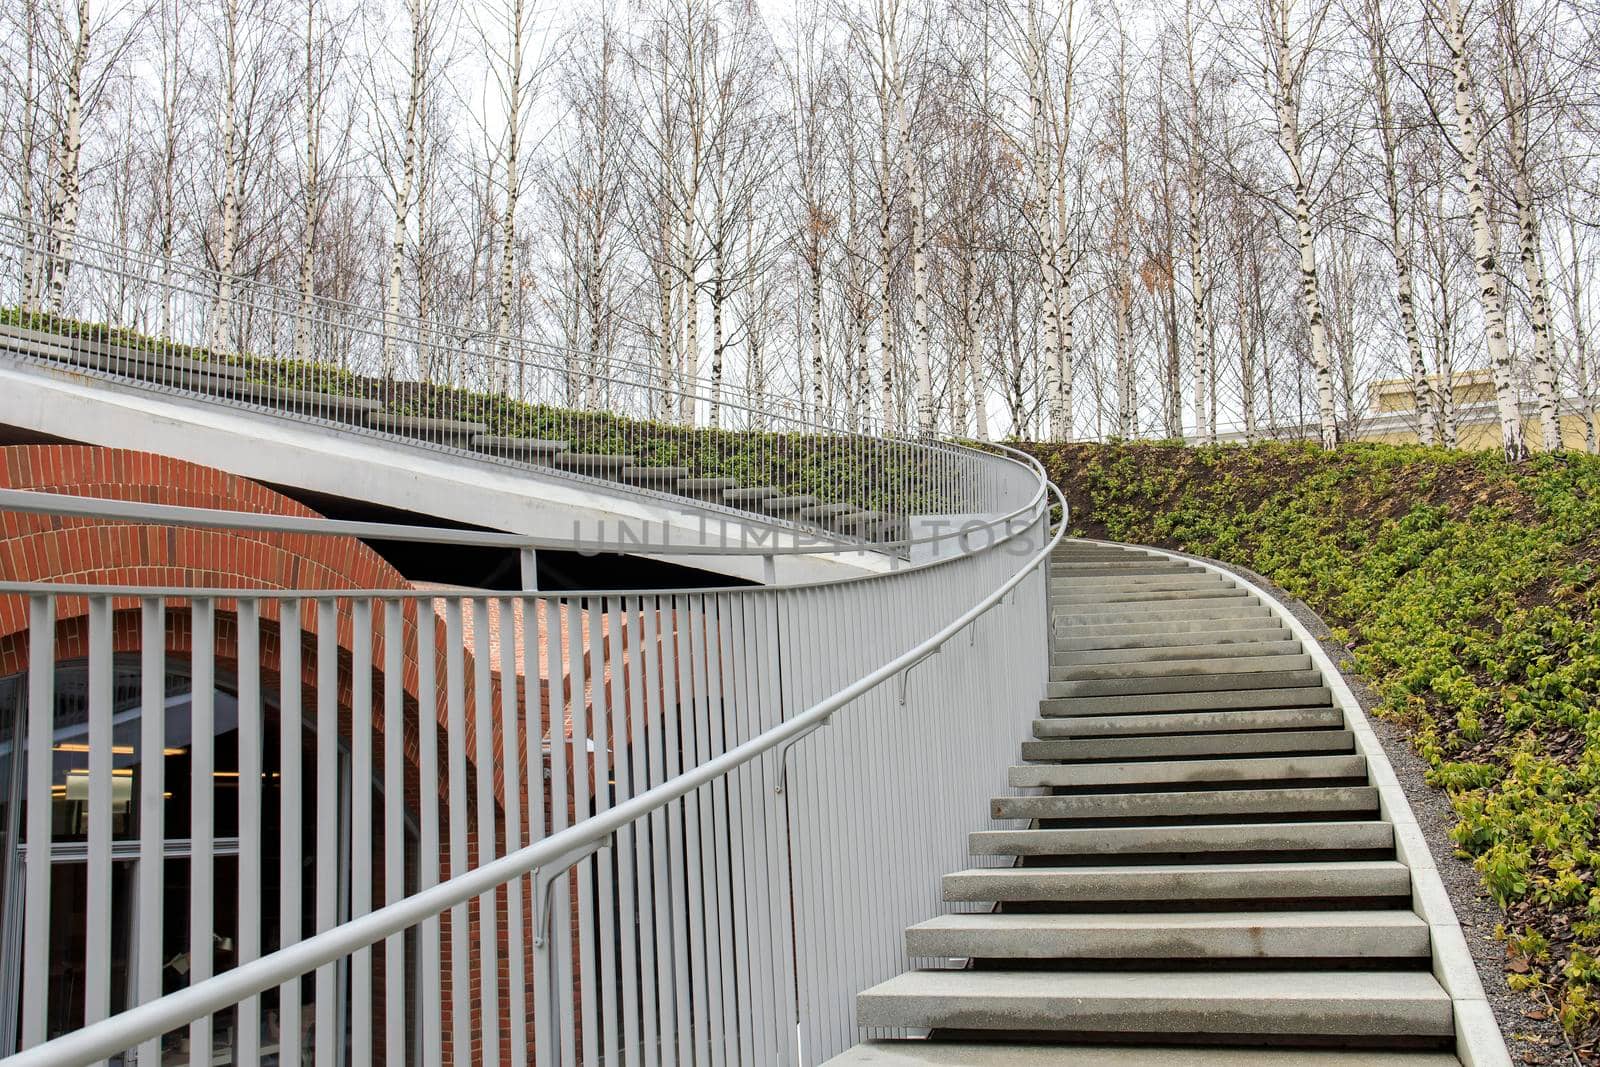 Tall modern winding staircase with railings in a birch grove by elenarostunova